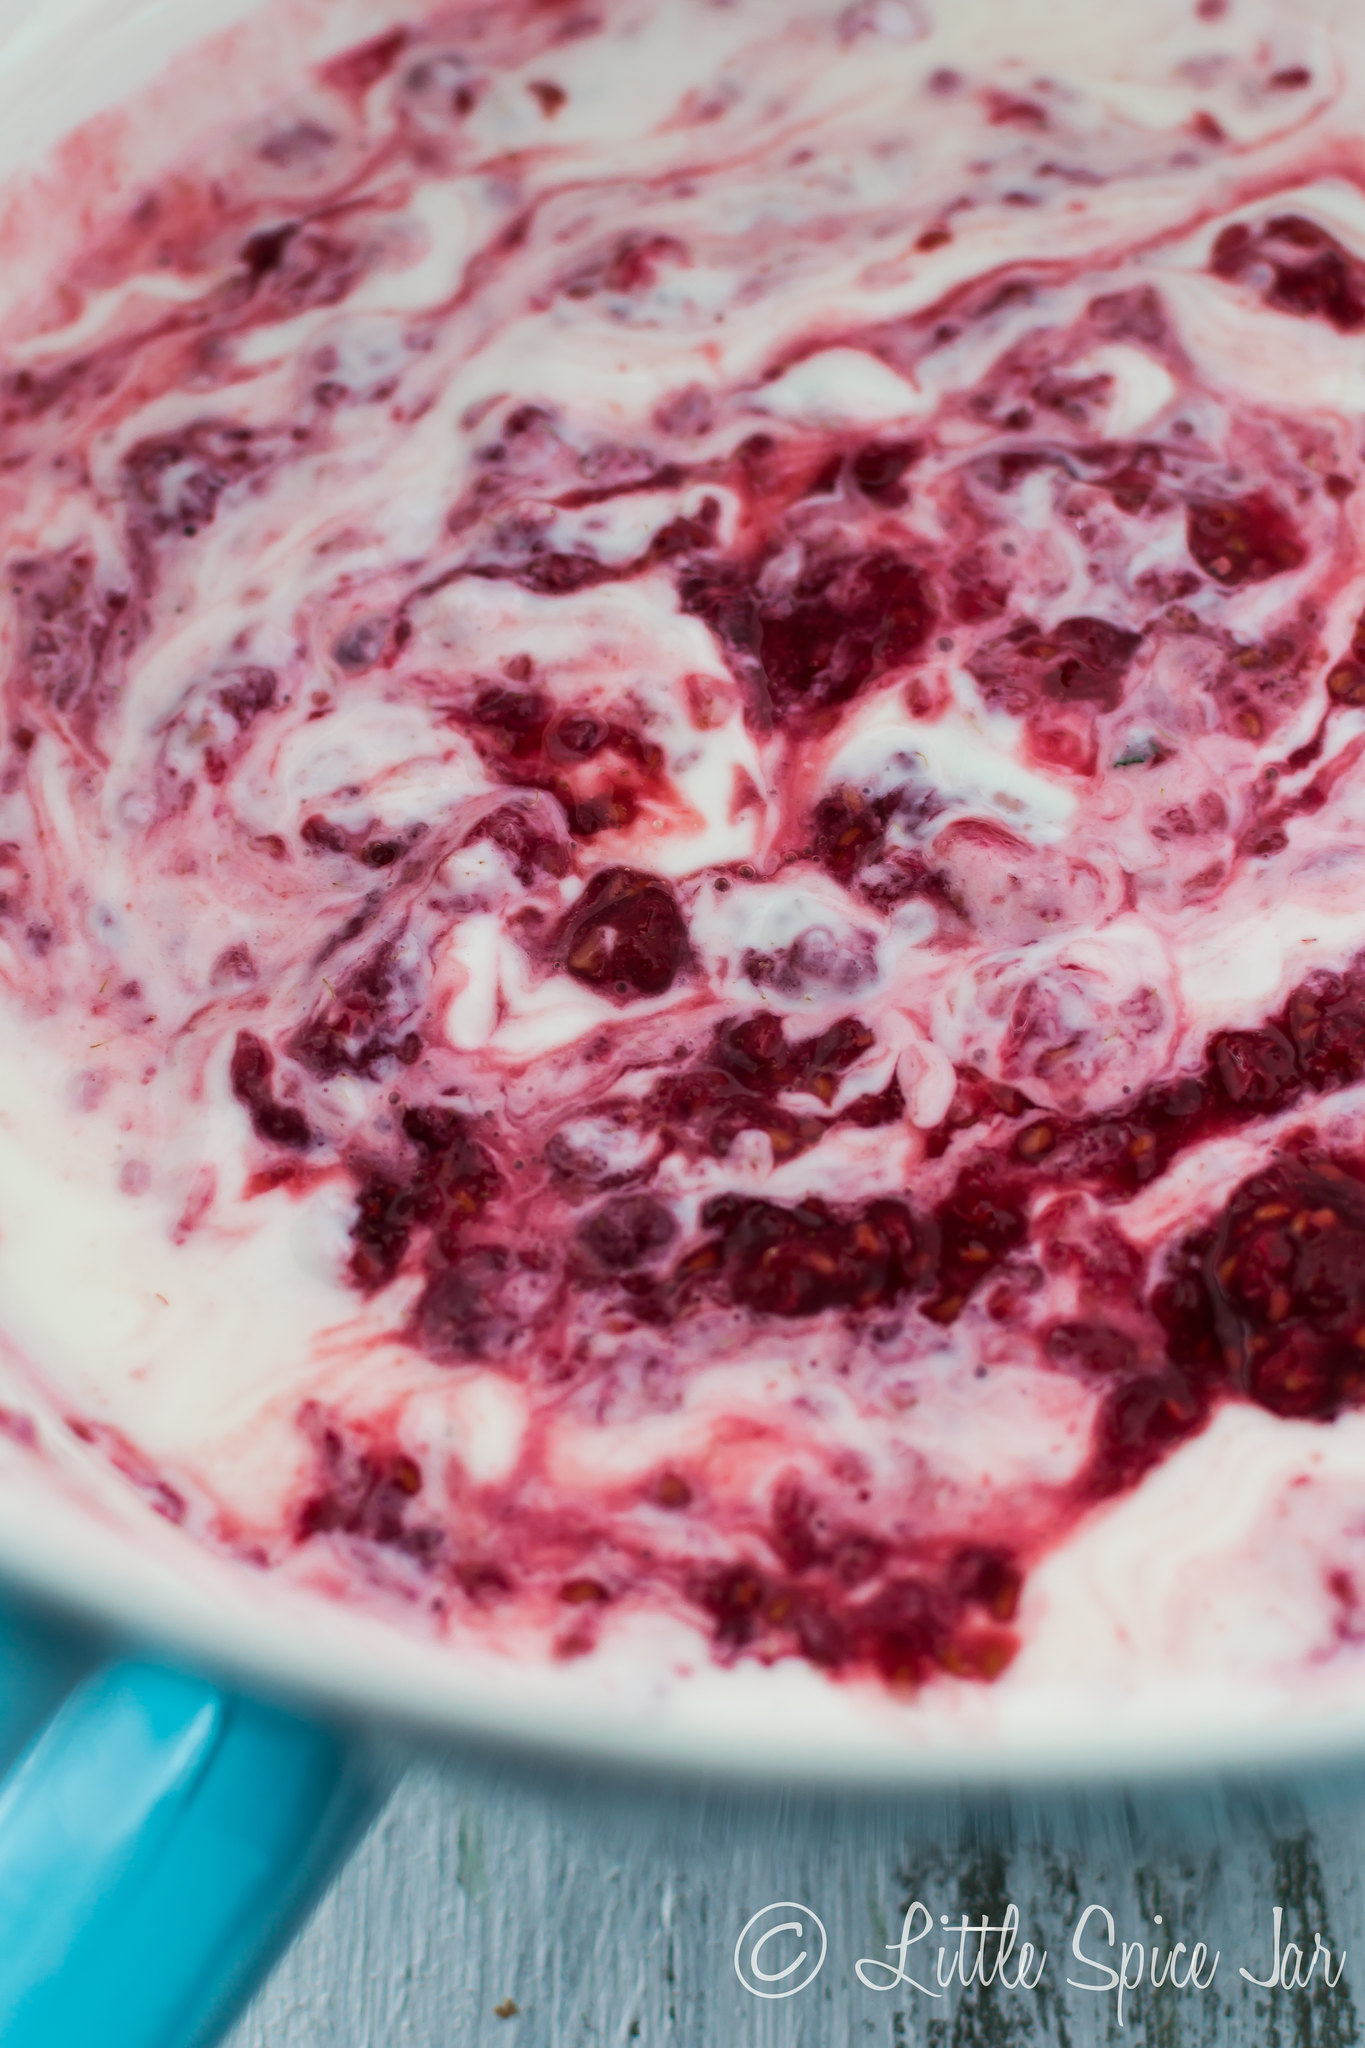 Greek yogurt mixture swirled with pureed raspberries in bowl